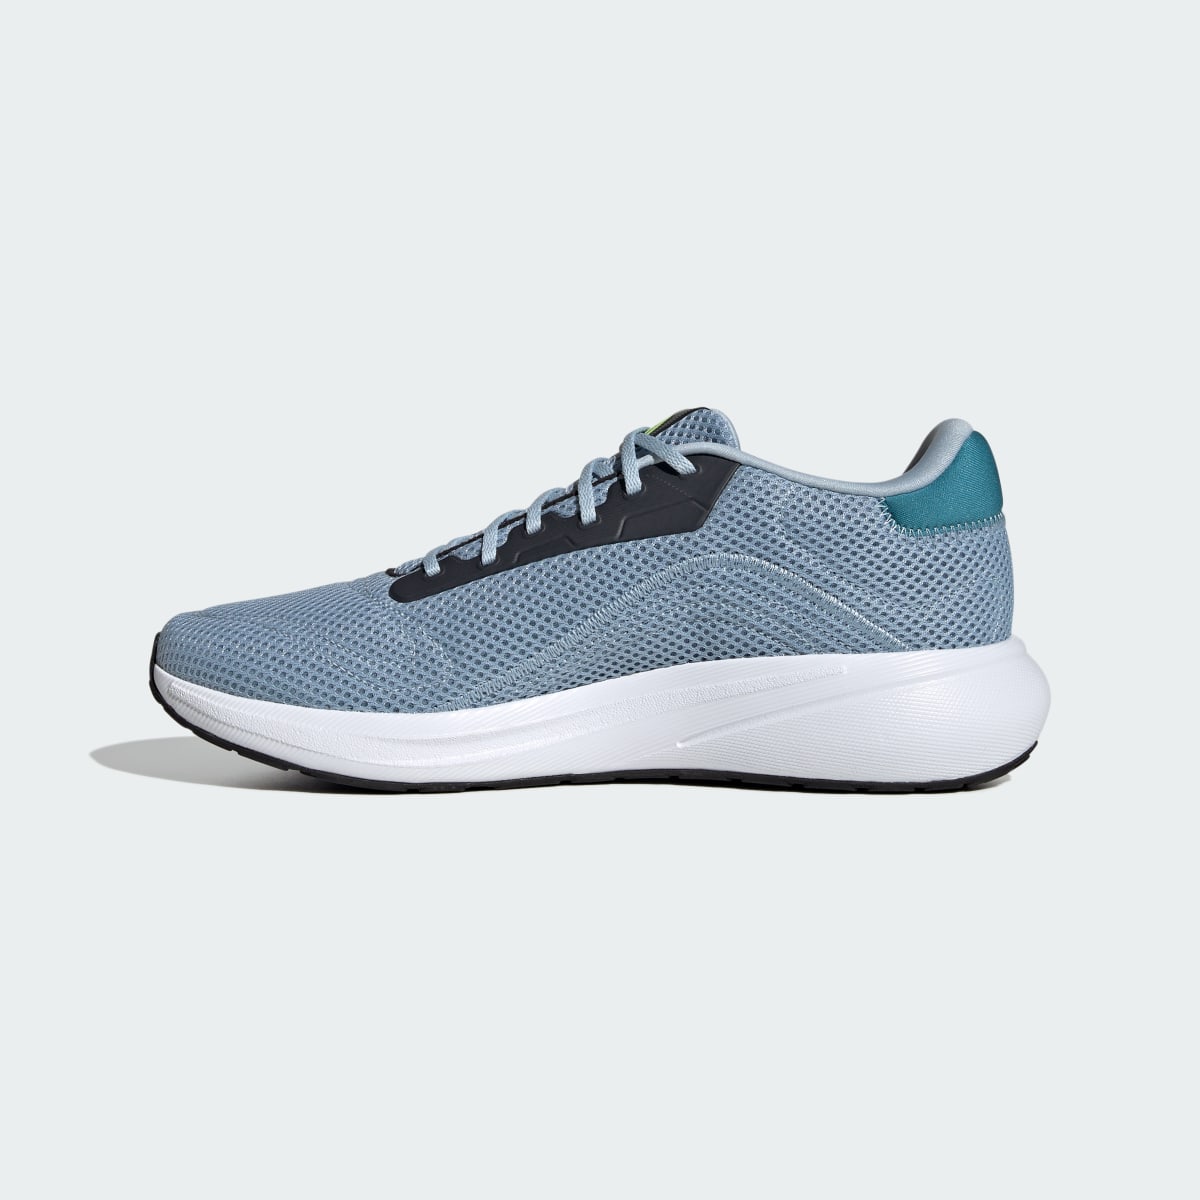 Adidas Response Runner Shoes. 7